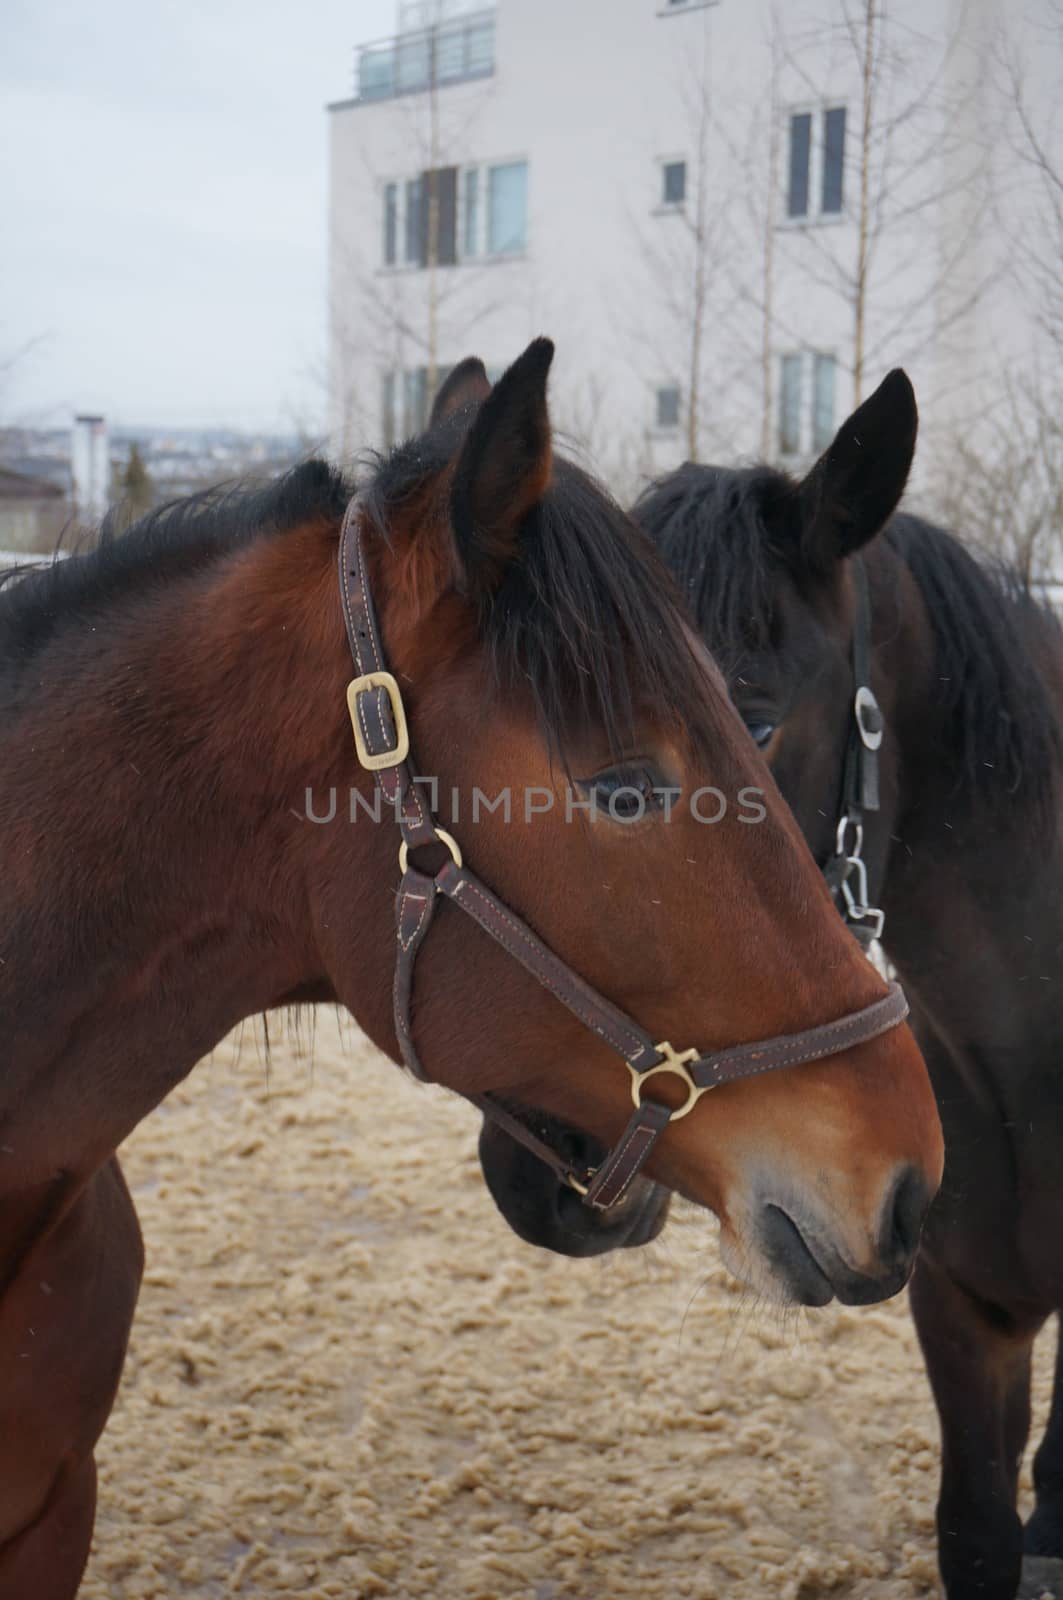 Two beautiful horses by Marirust